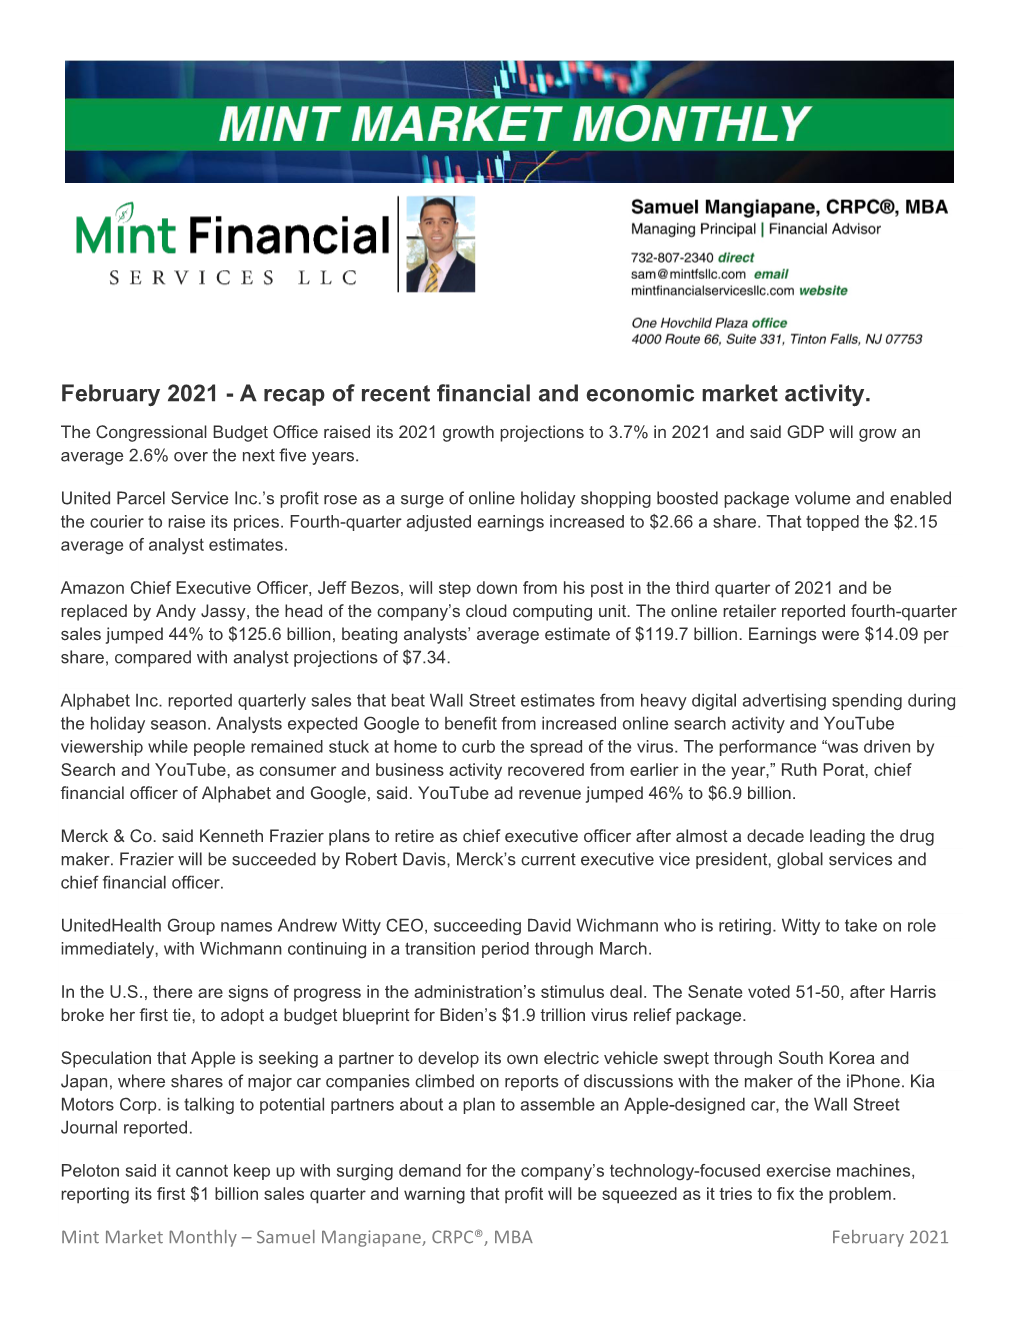 February 2021 - a Recap of Recent Financial and Economic Market Activity